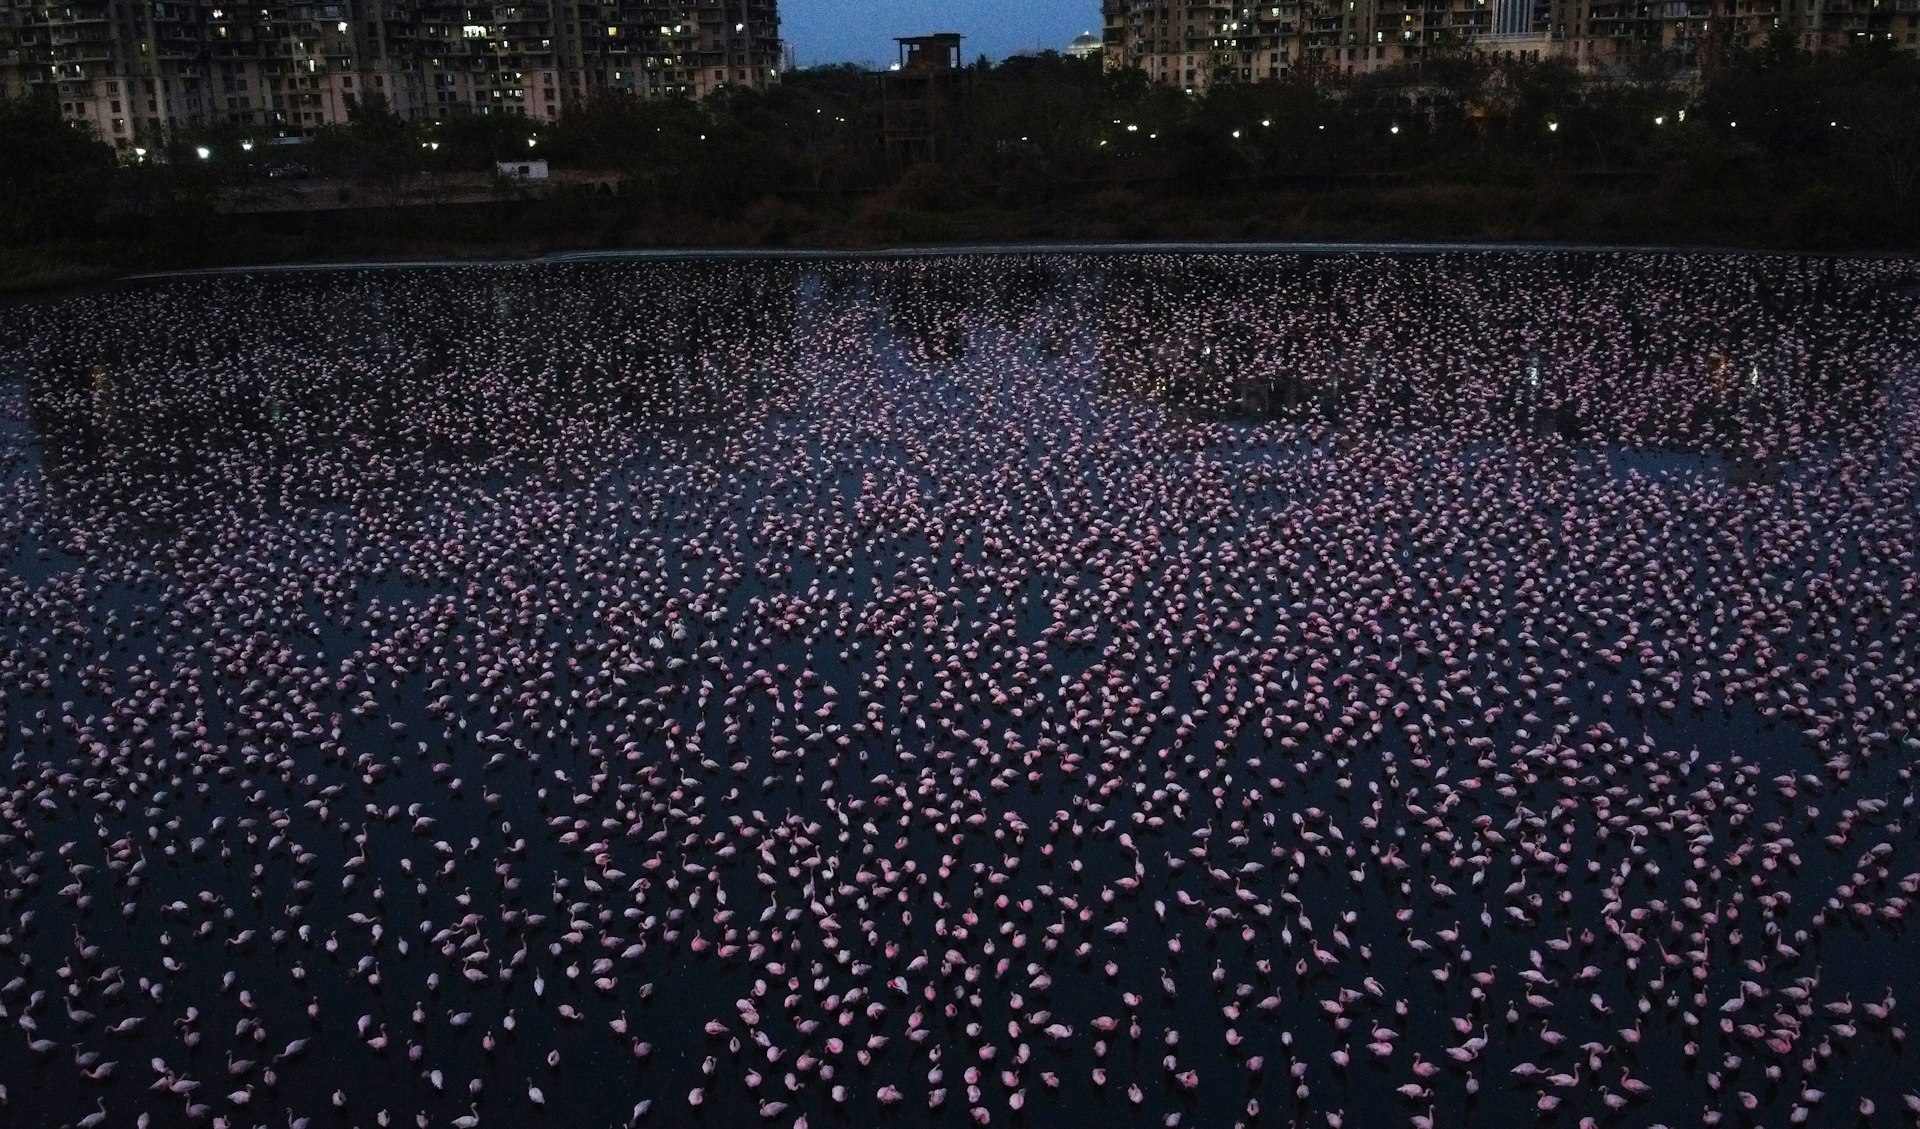 Thousands of flamingos congregate on a lake in Mumbai